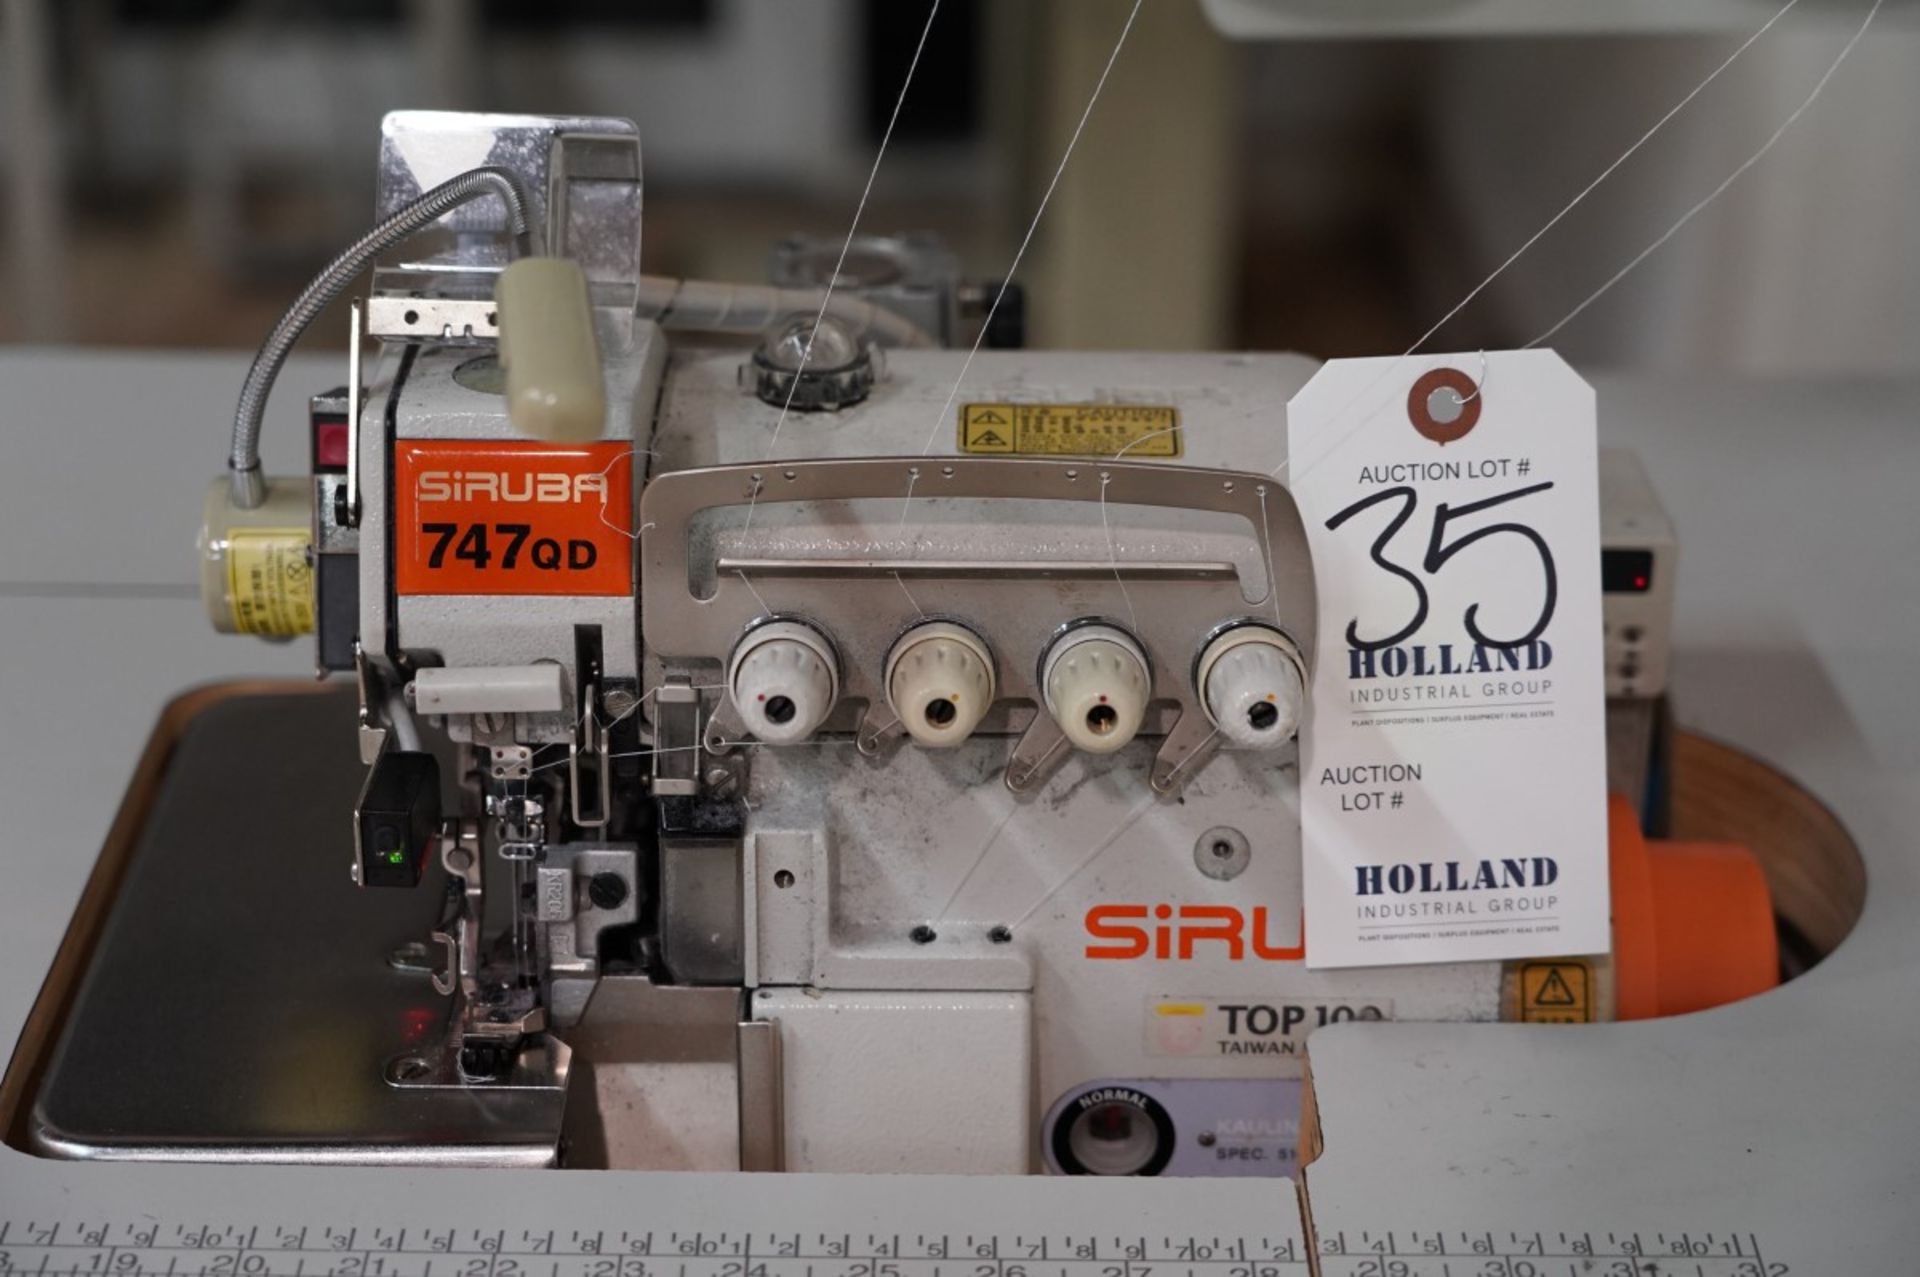 Siruba Overlock Sewing Machine Model 747QD - 514M2-24 / VTE S/N HDJA1407C00350, Adjustable Speed, G